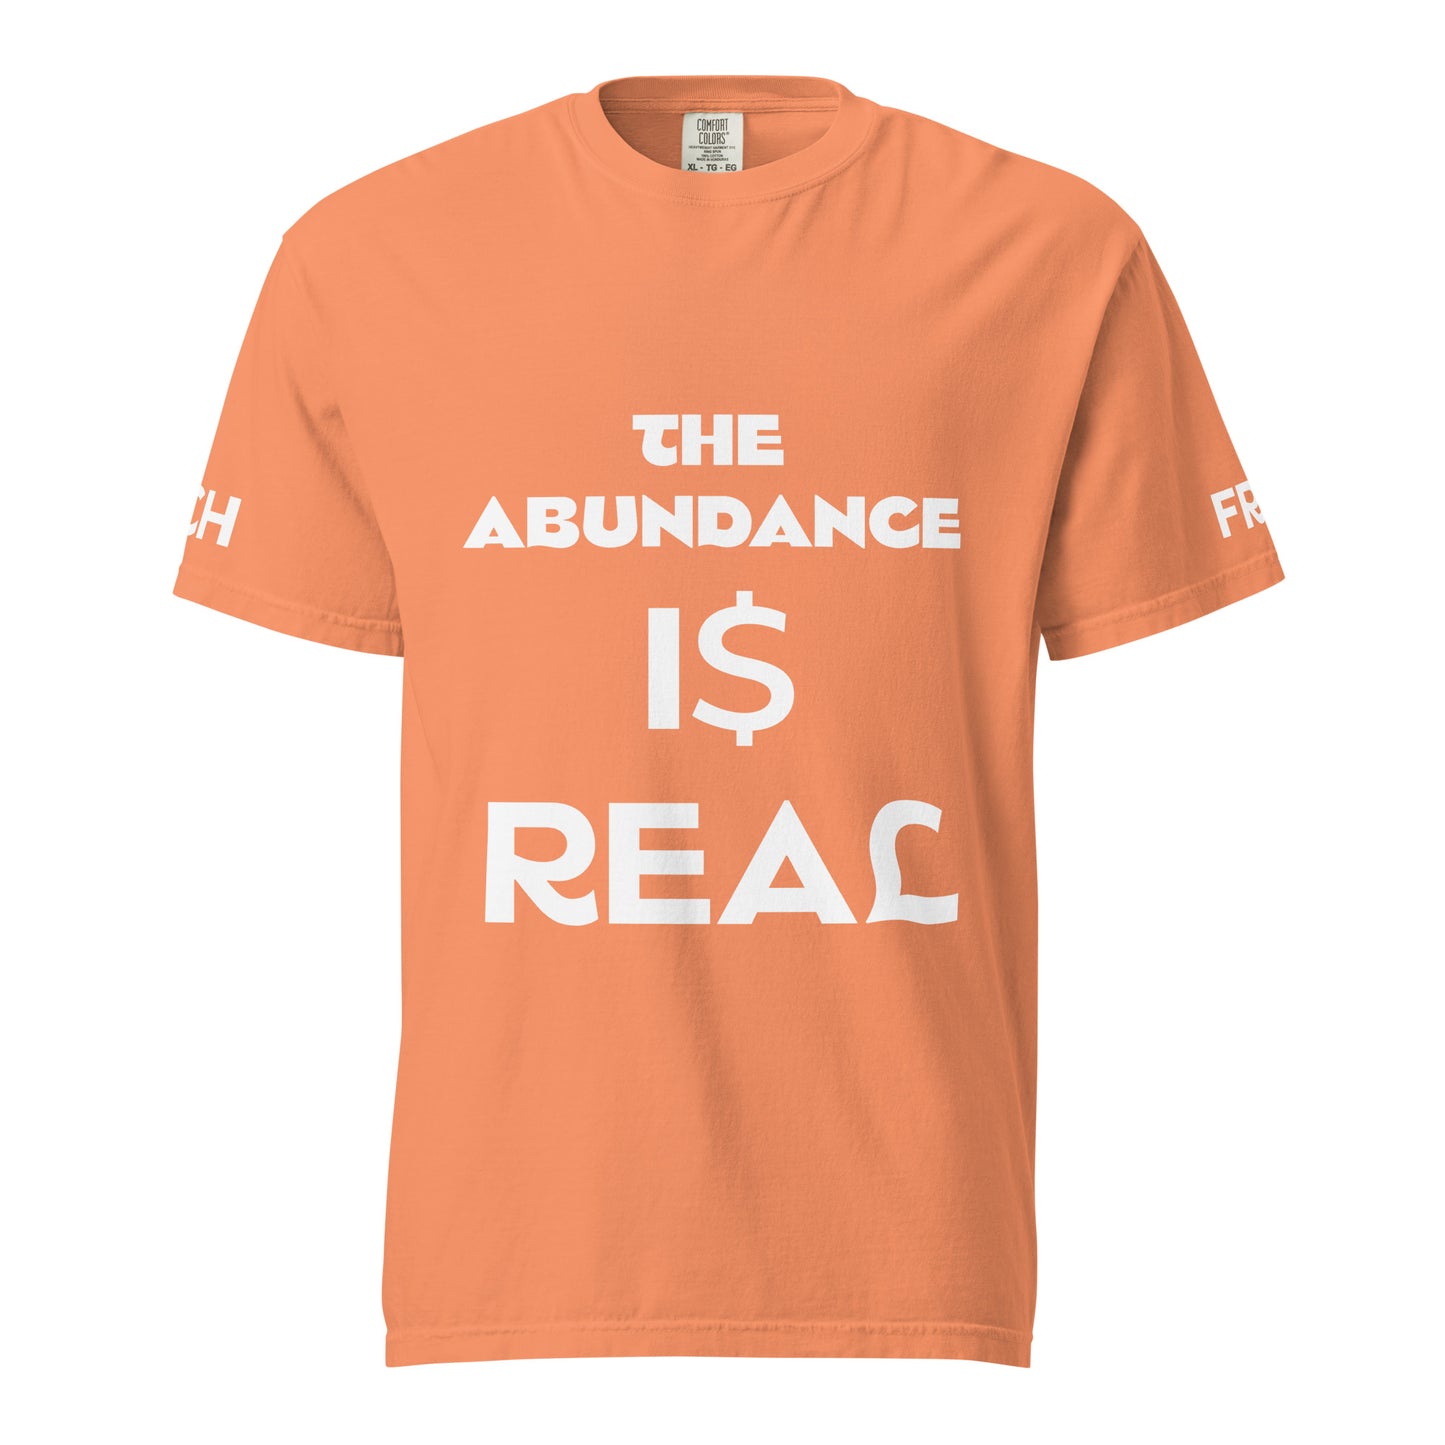 The Abundance I$ REAL T-Shirt